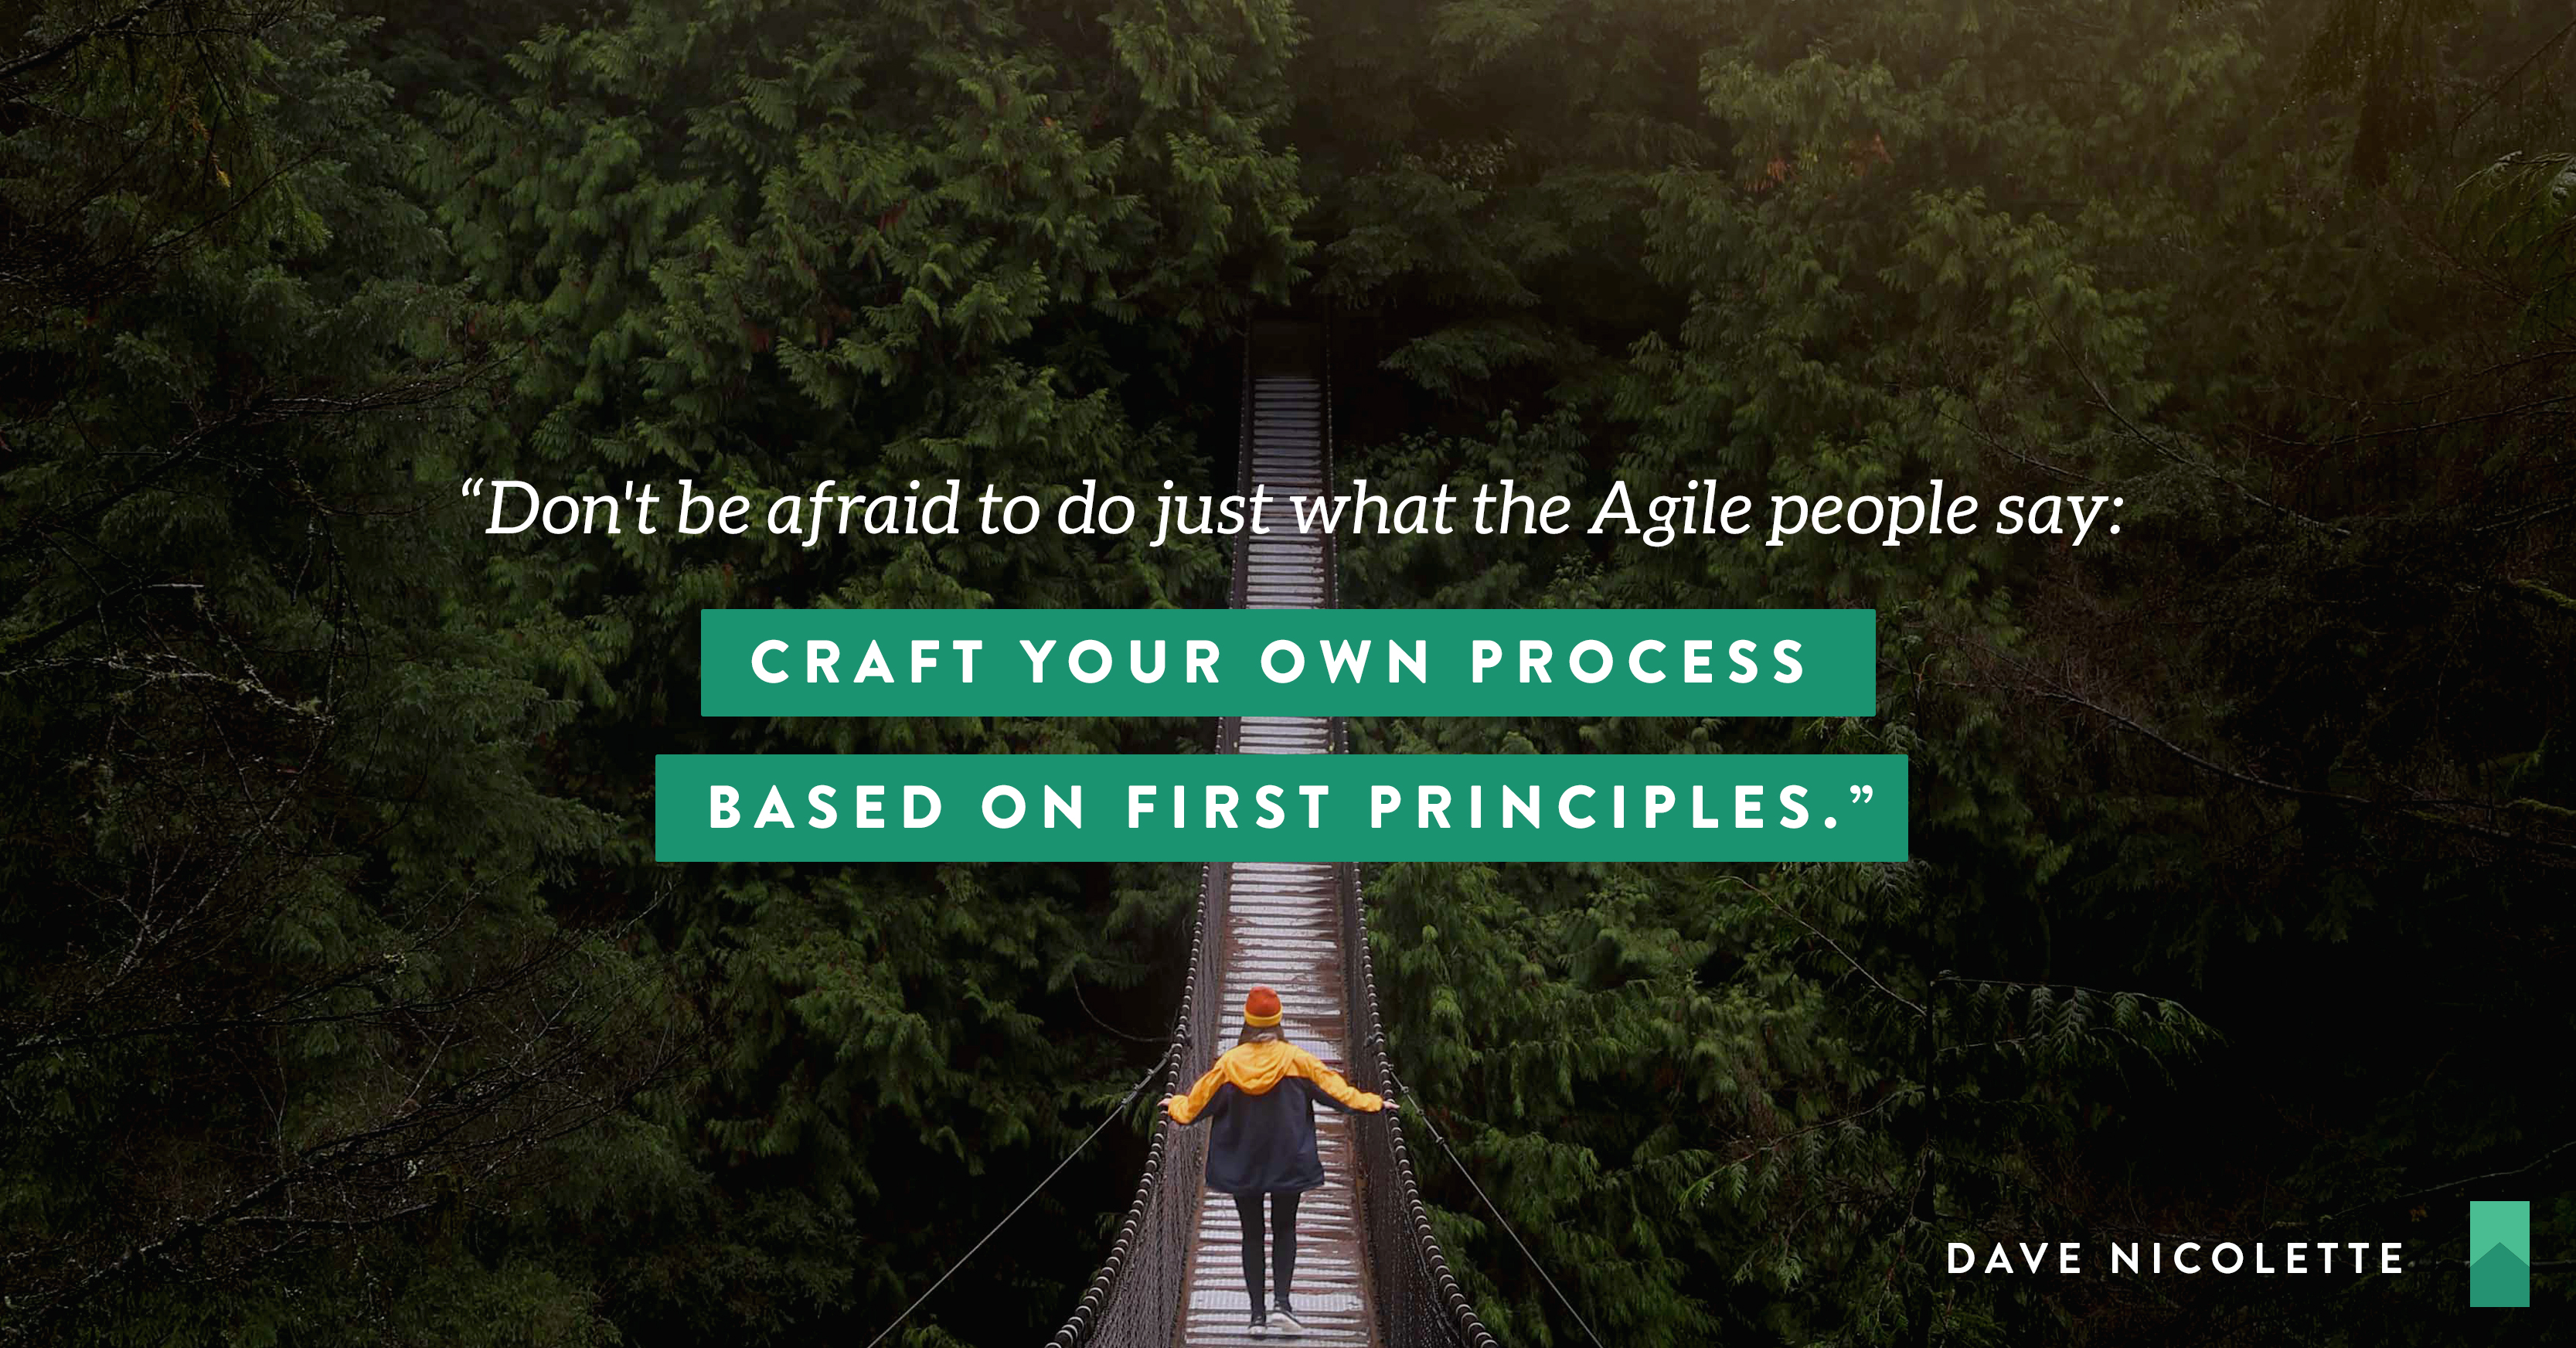 Toward a principles-based process